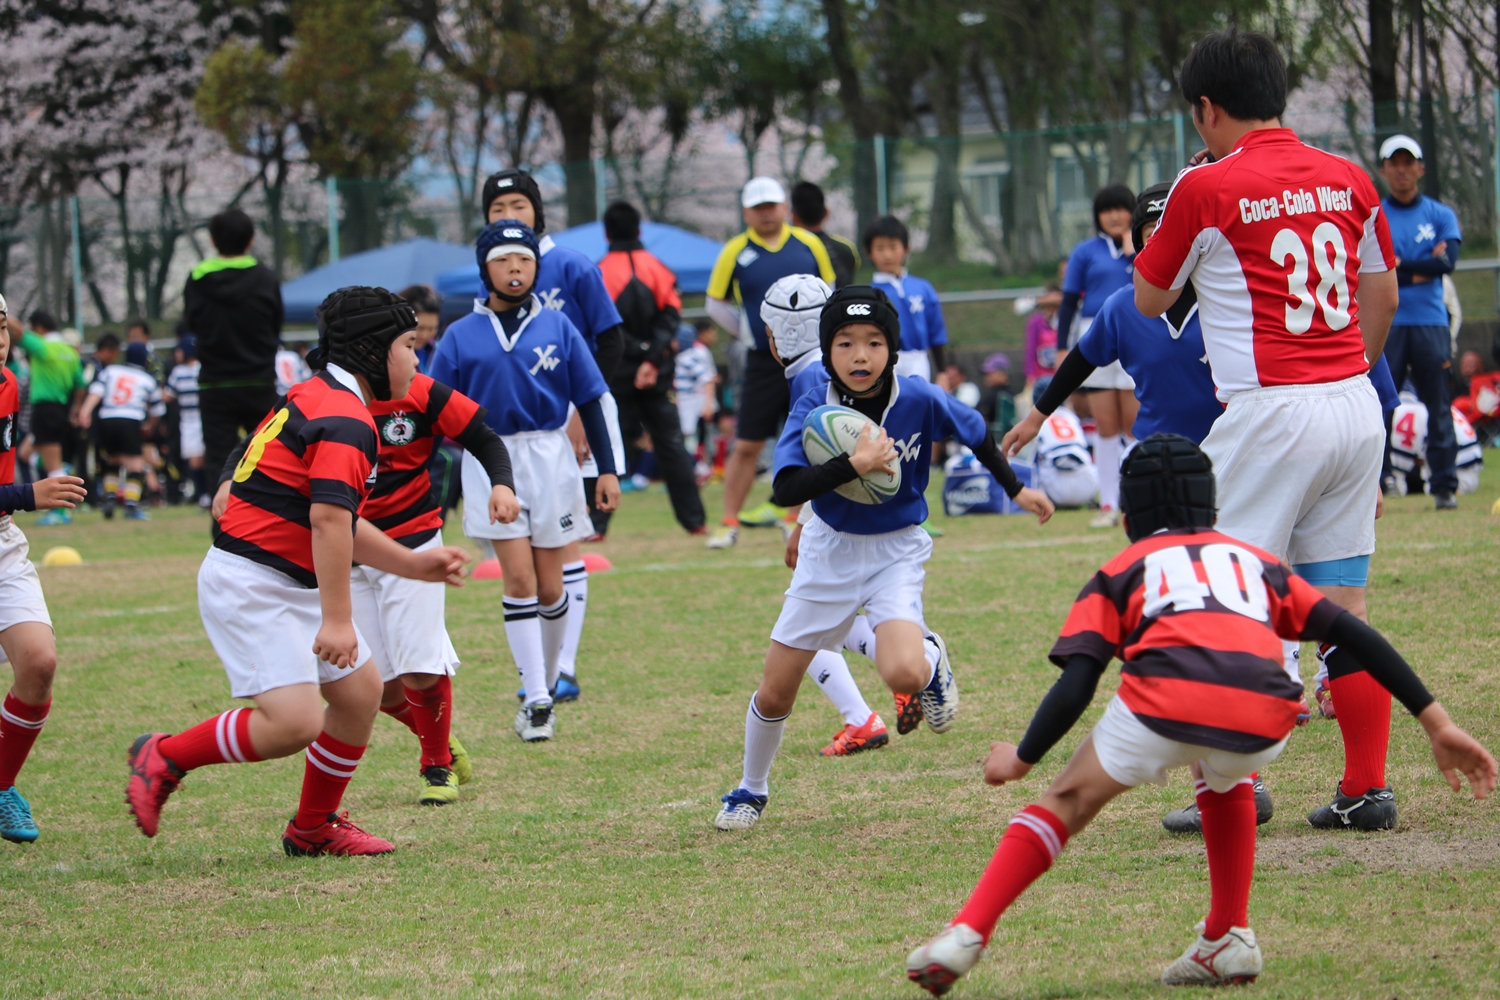 youngwave_kitakyusyu_rugby_school_kasugahai2016001.JPG